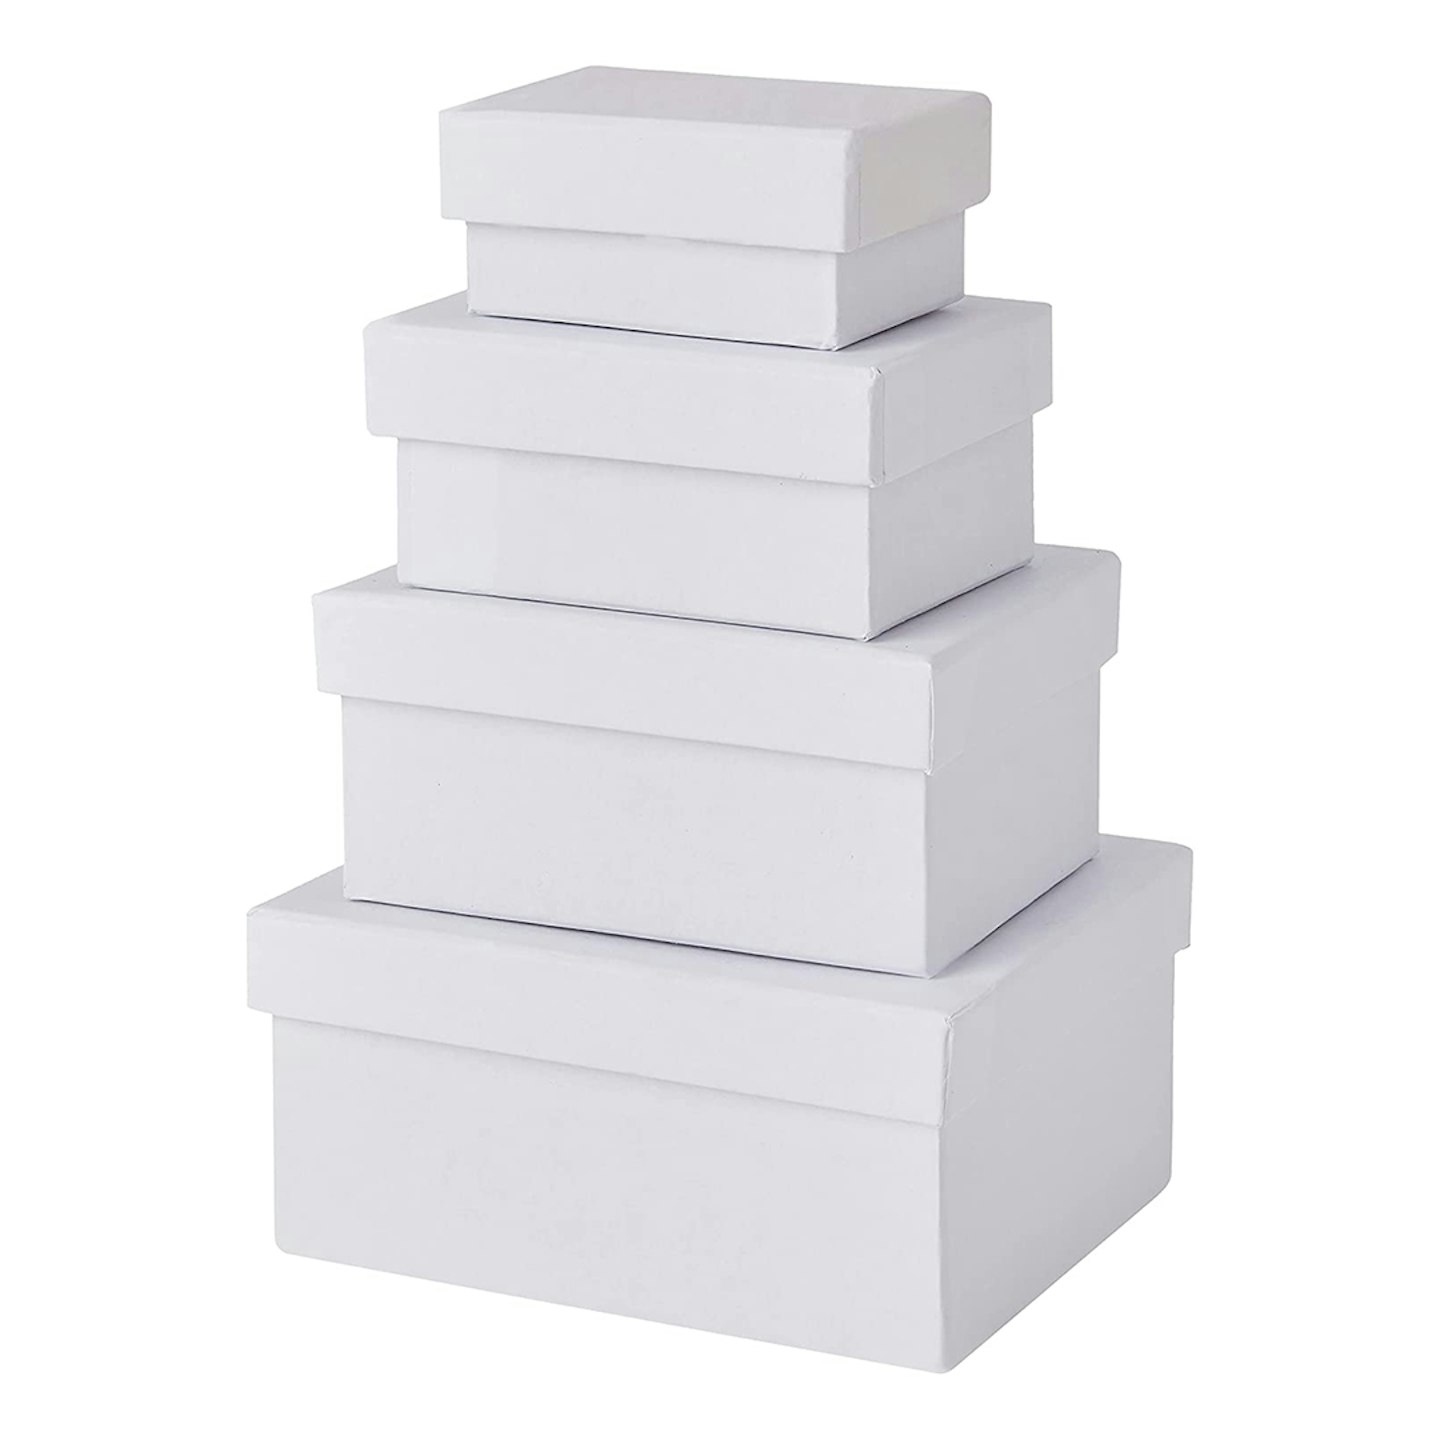 Multipurpose Rectangular Gift Boxes